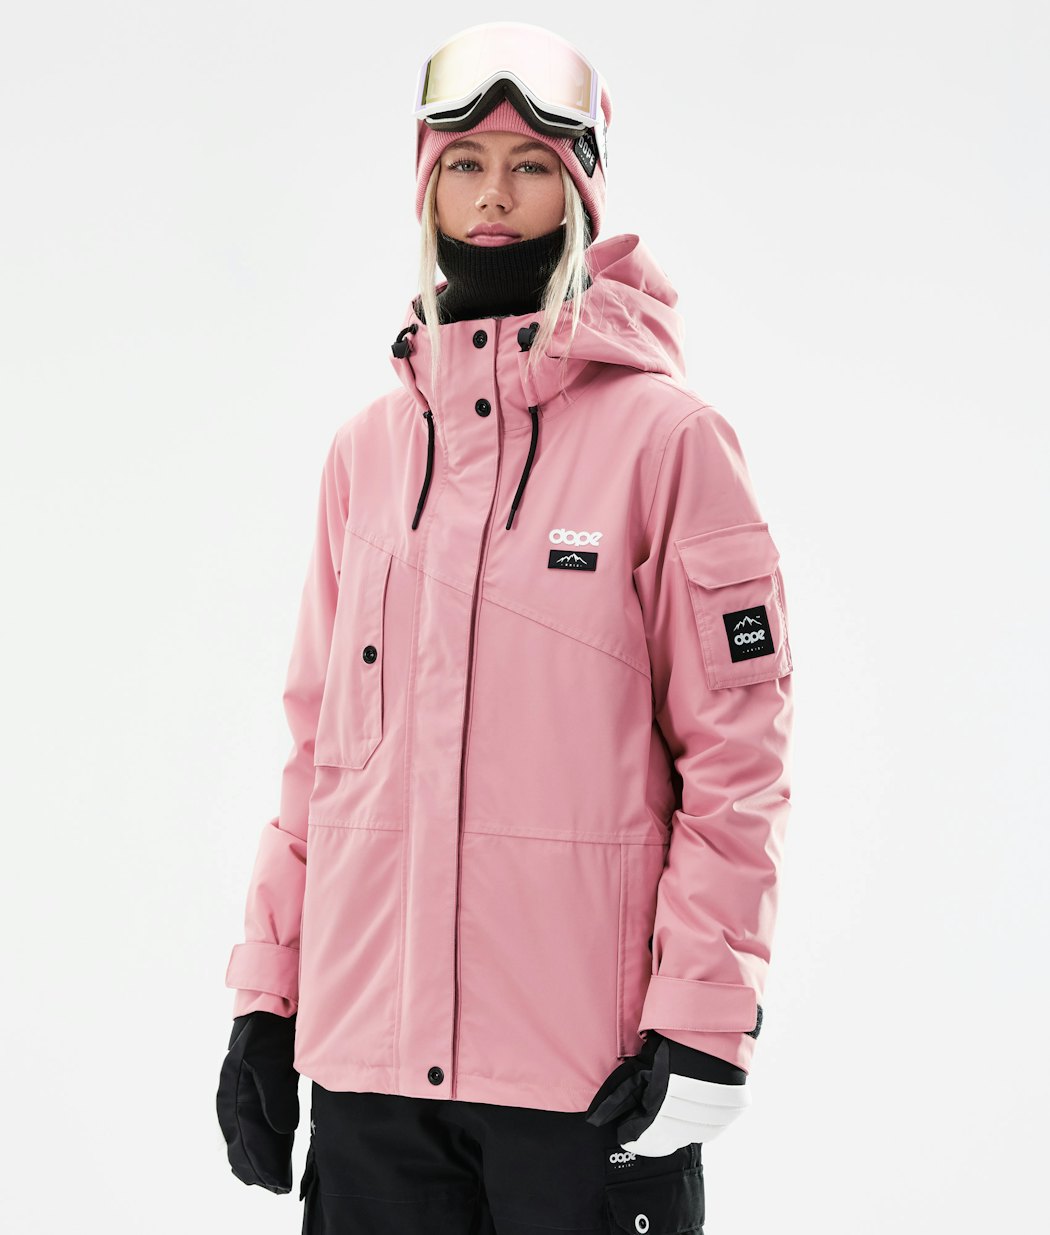 Dope Adept W 2021 Women's Snowboard Jacket Pink